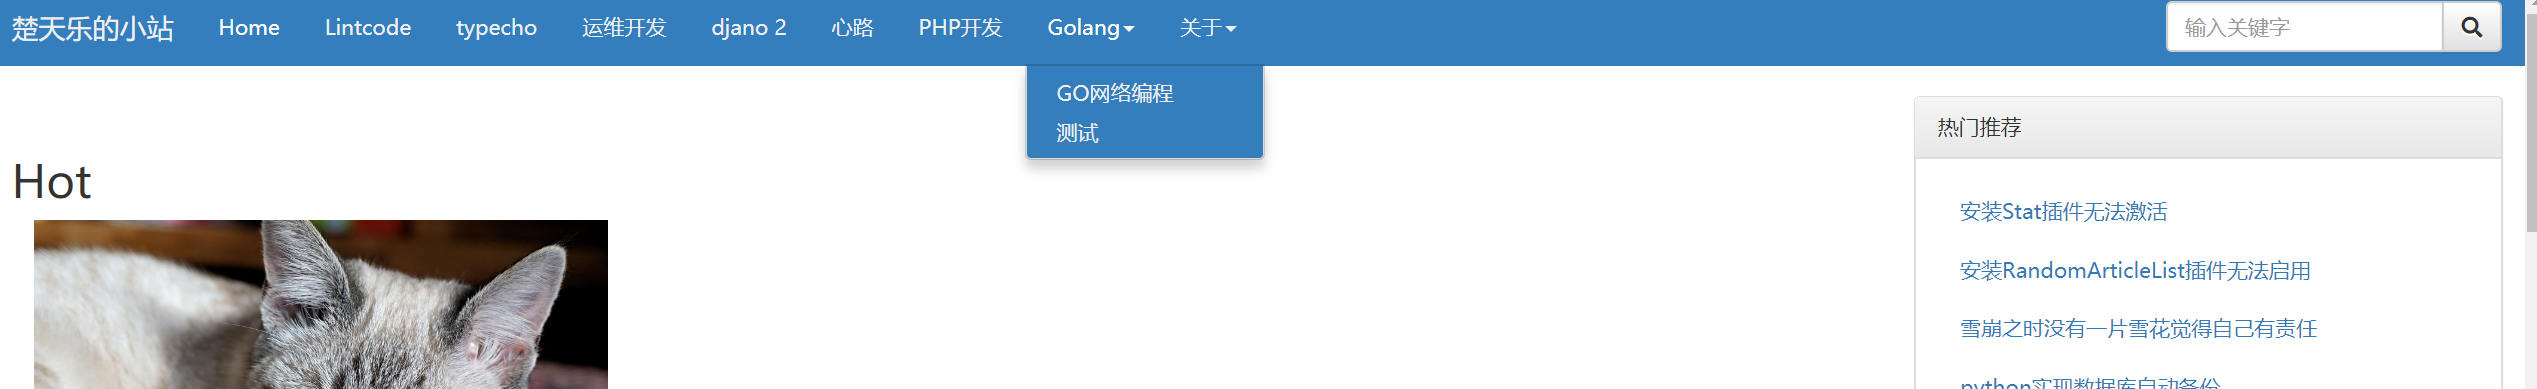 WeChat Screenshot_20180823122738.png